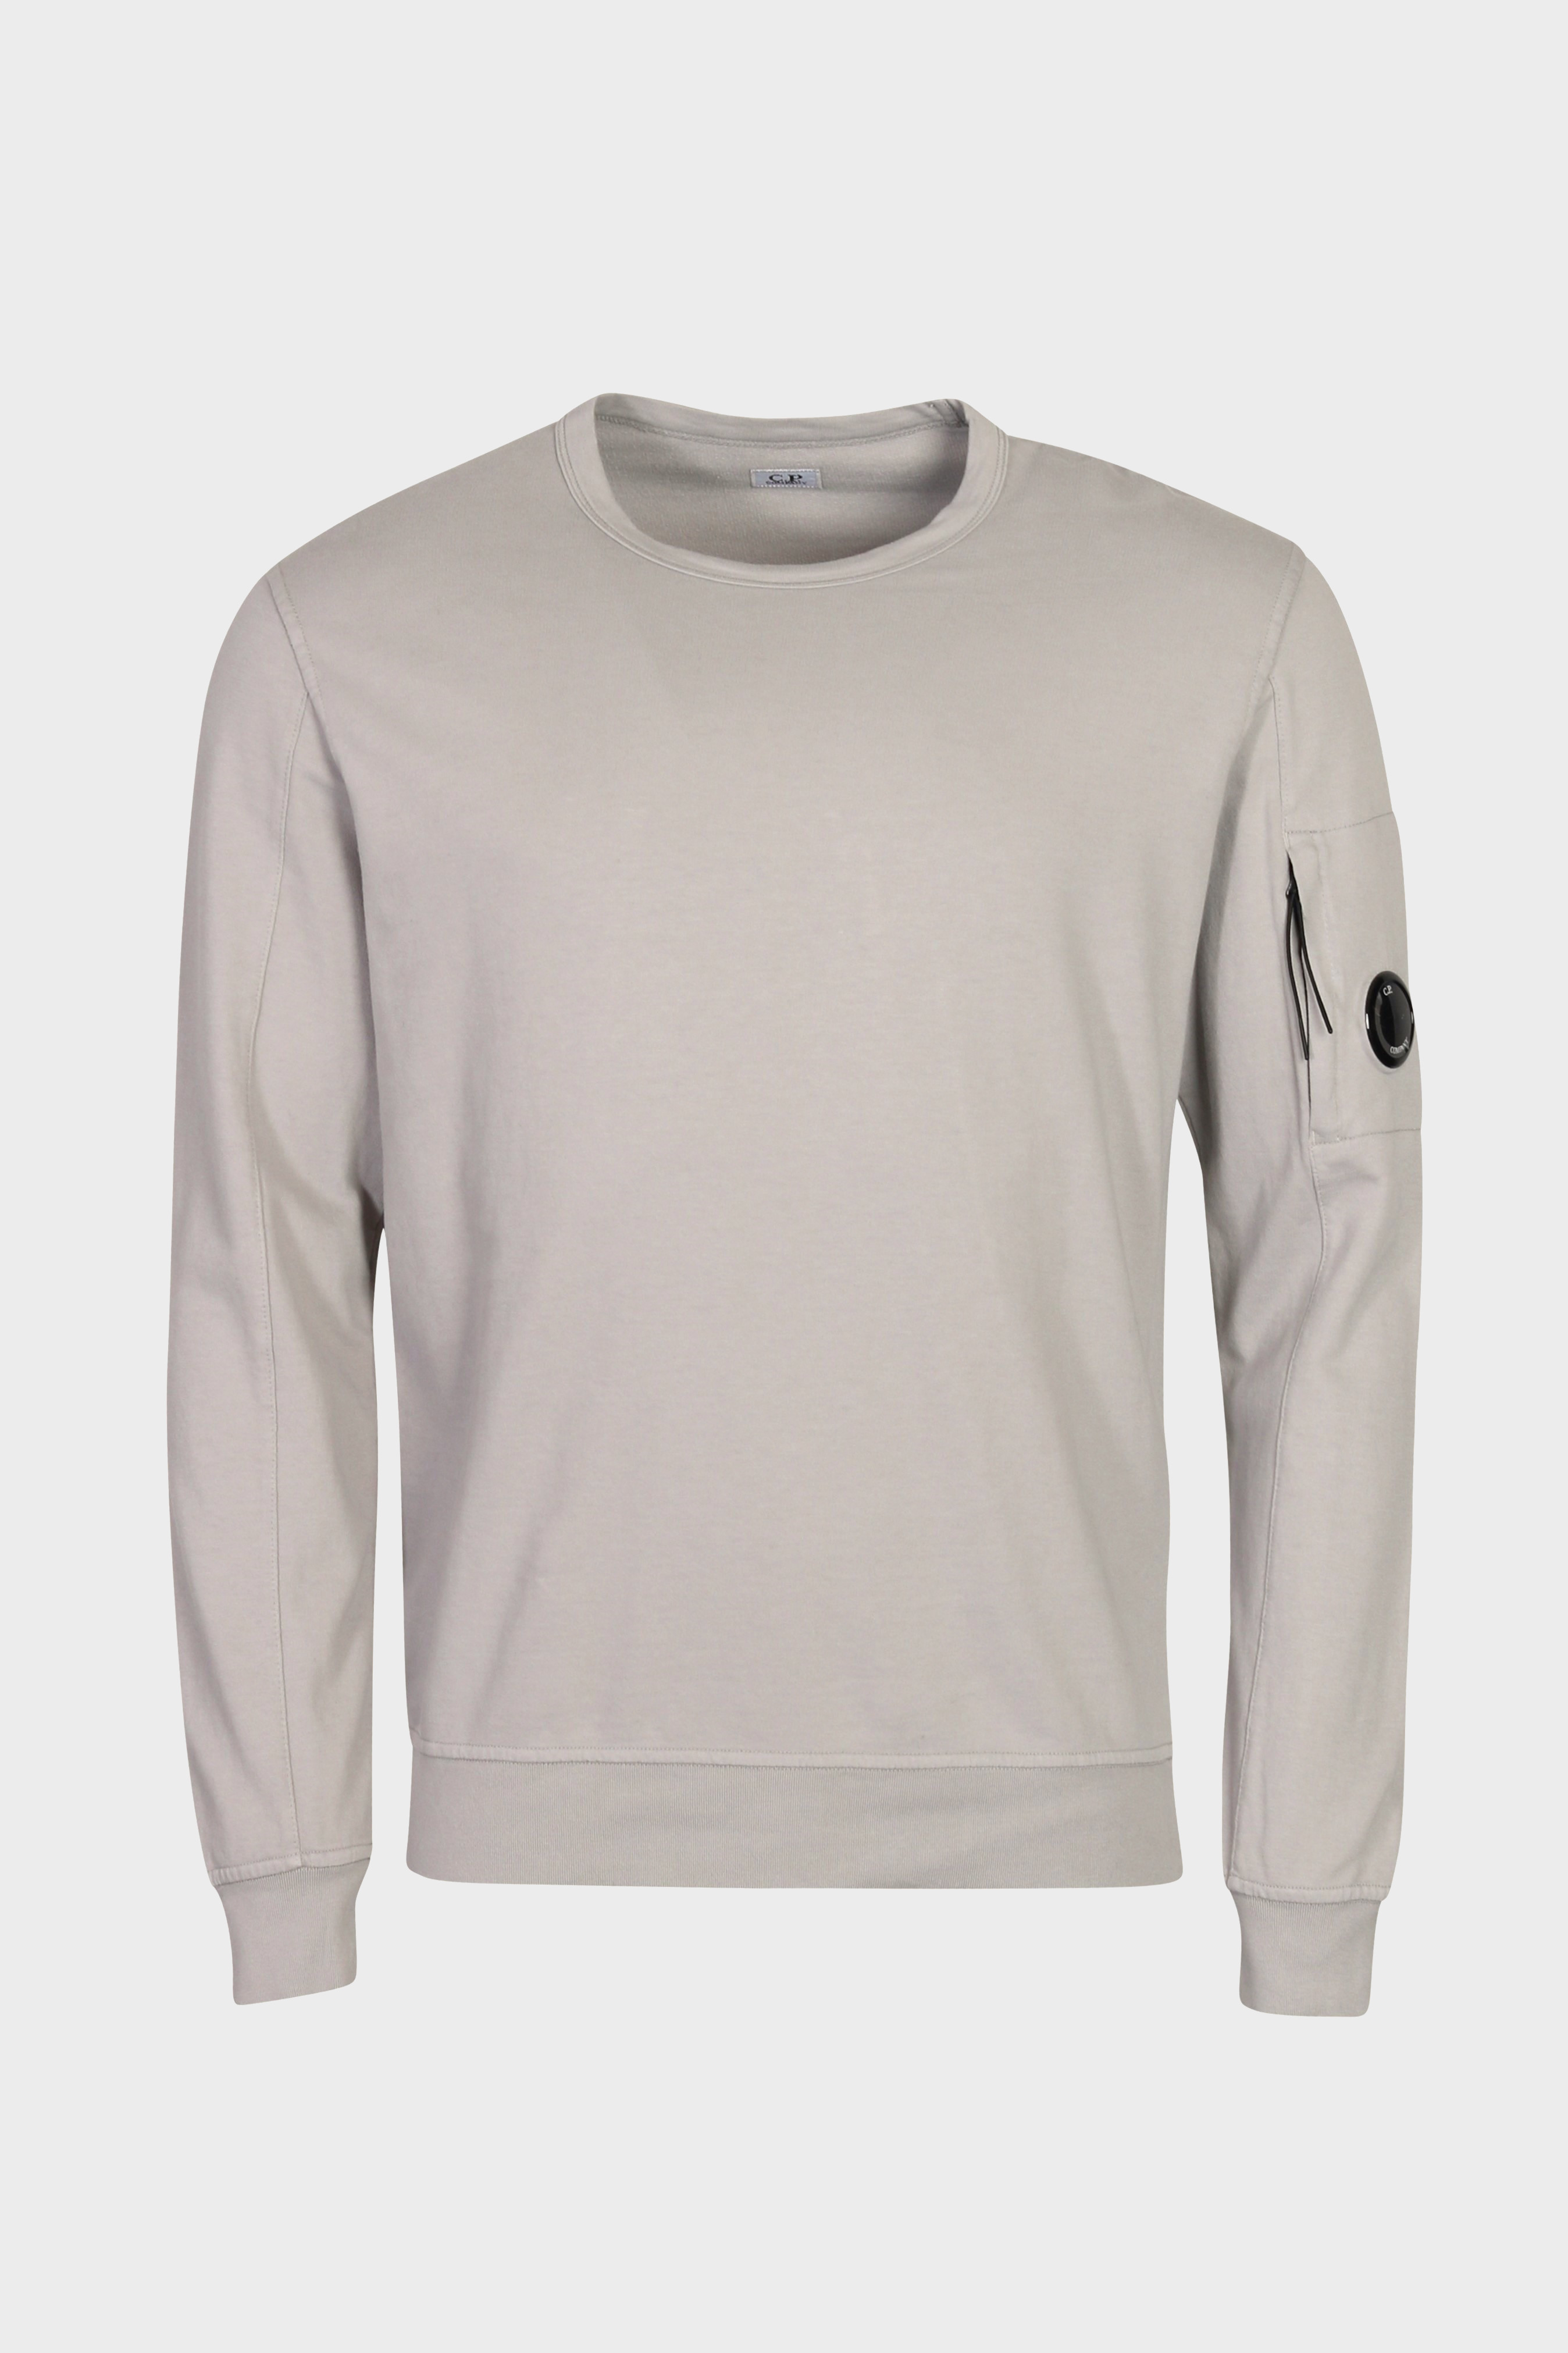 C.P. COMPANY Light Fleece Sweatshirt in Drizzle Grey